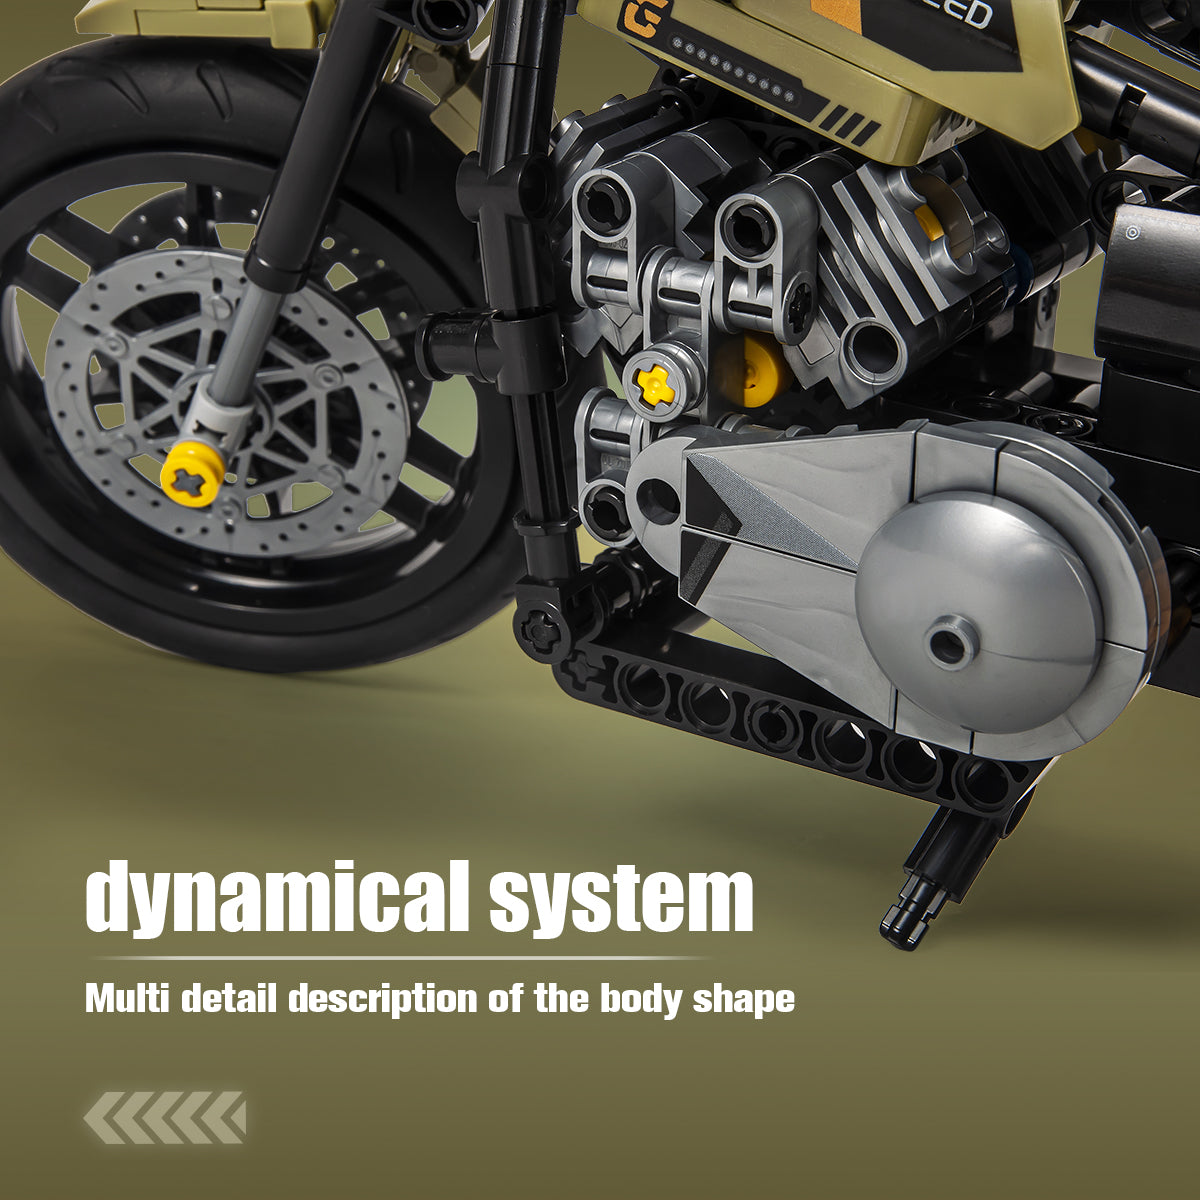 DAHONPA 2 in-1 Transform Motorbike Building Blocks Set, with 479 PCS Moto & Fighter Transform